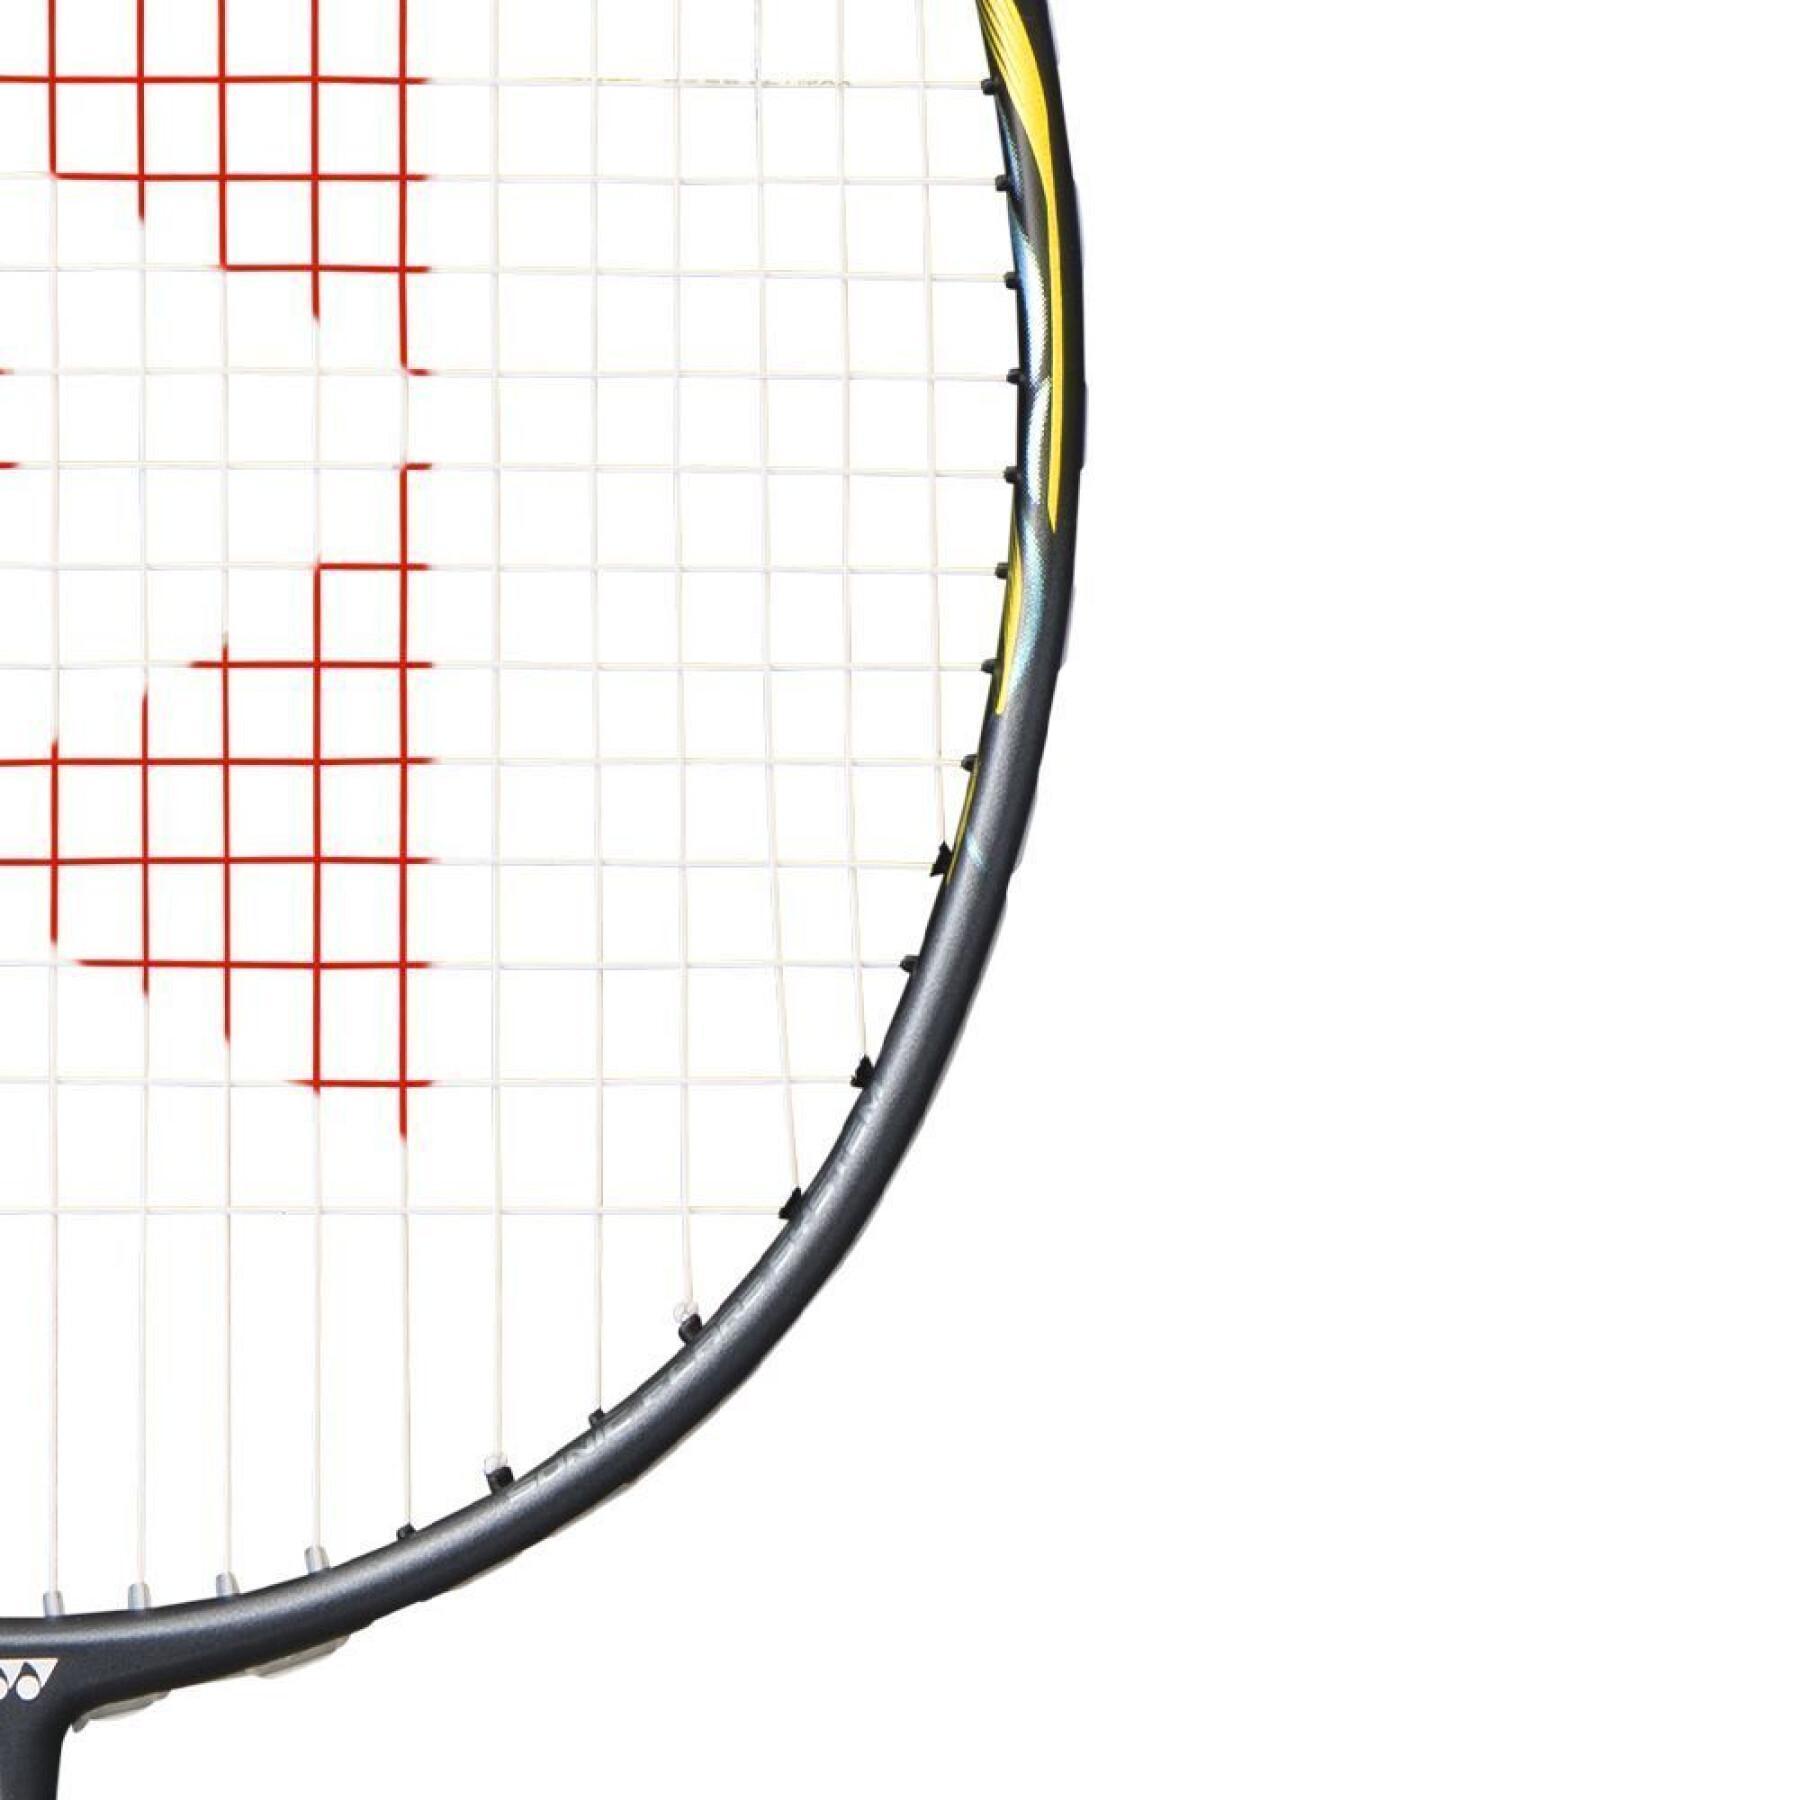 Badminton racket Yonex nanoflare 800 lt 5u5